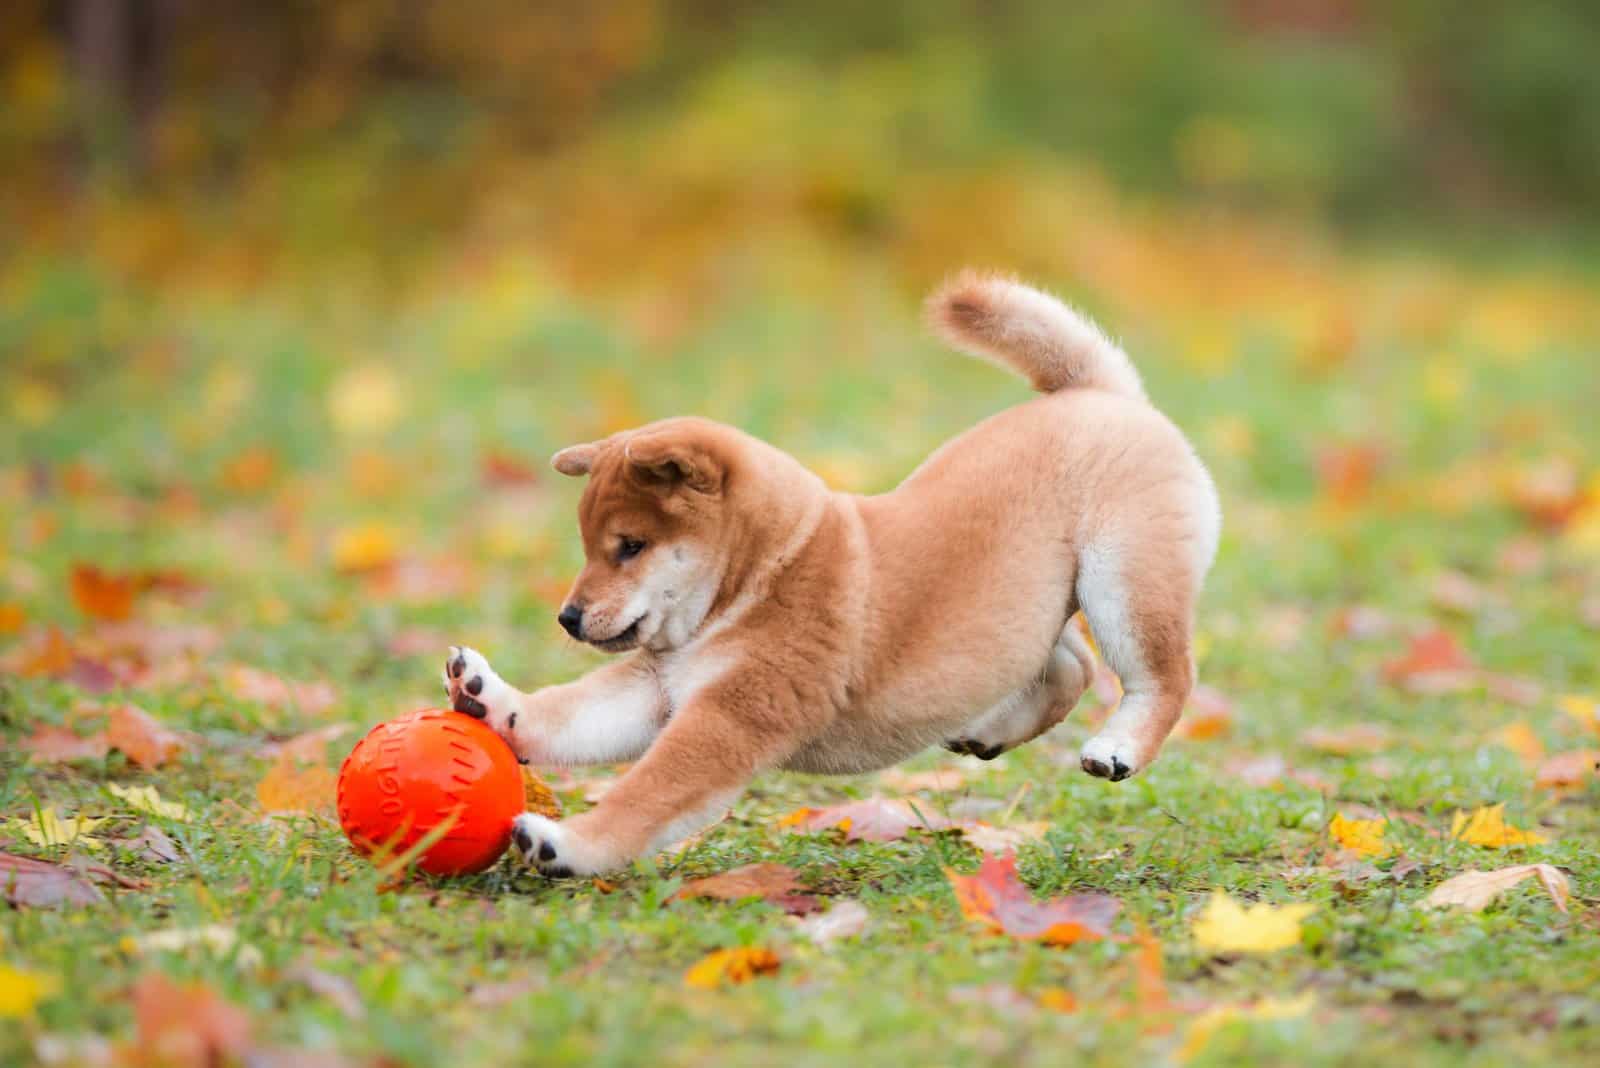 shiba inu puppy playing with ball